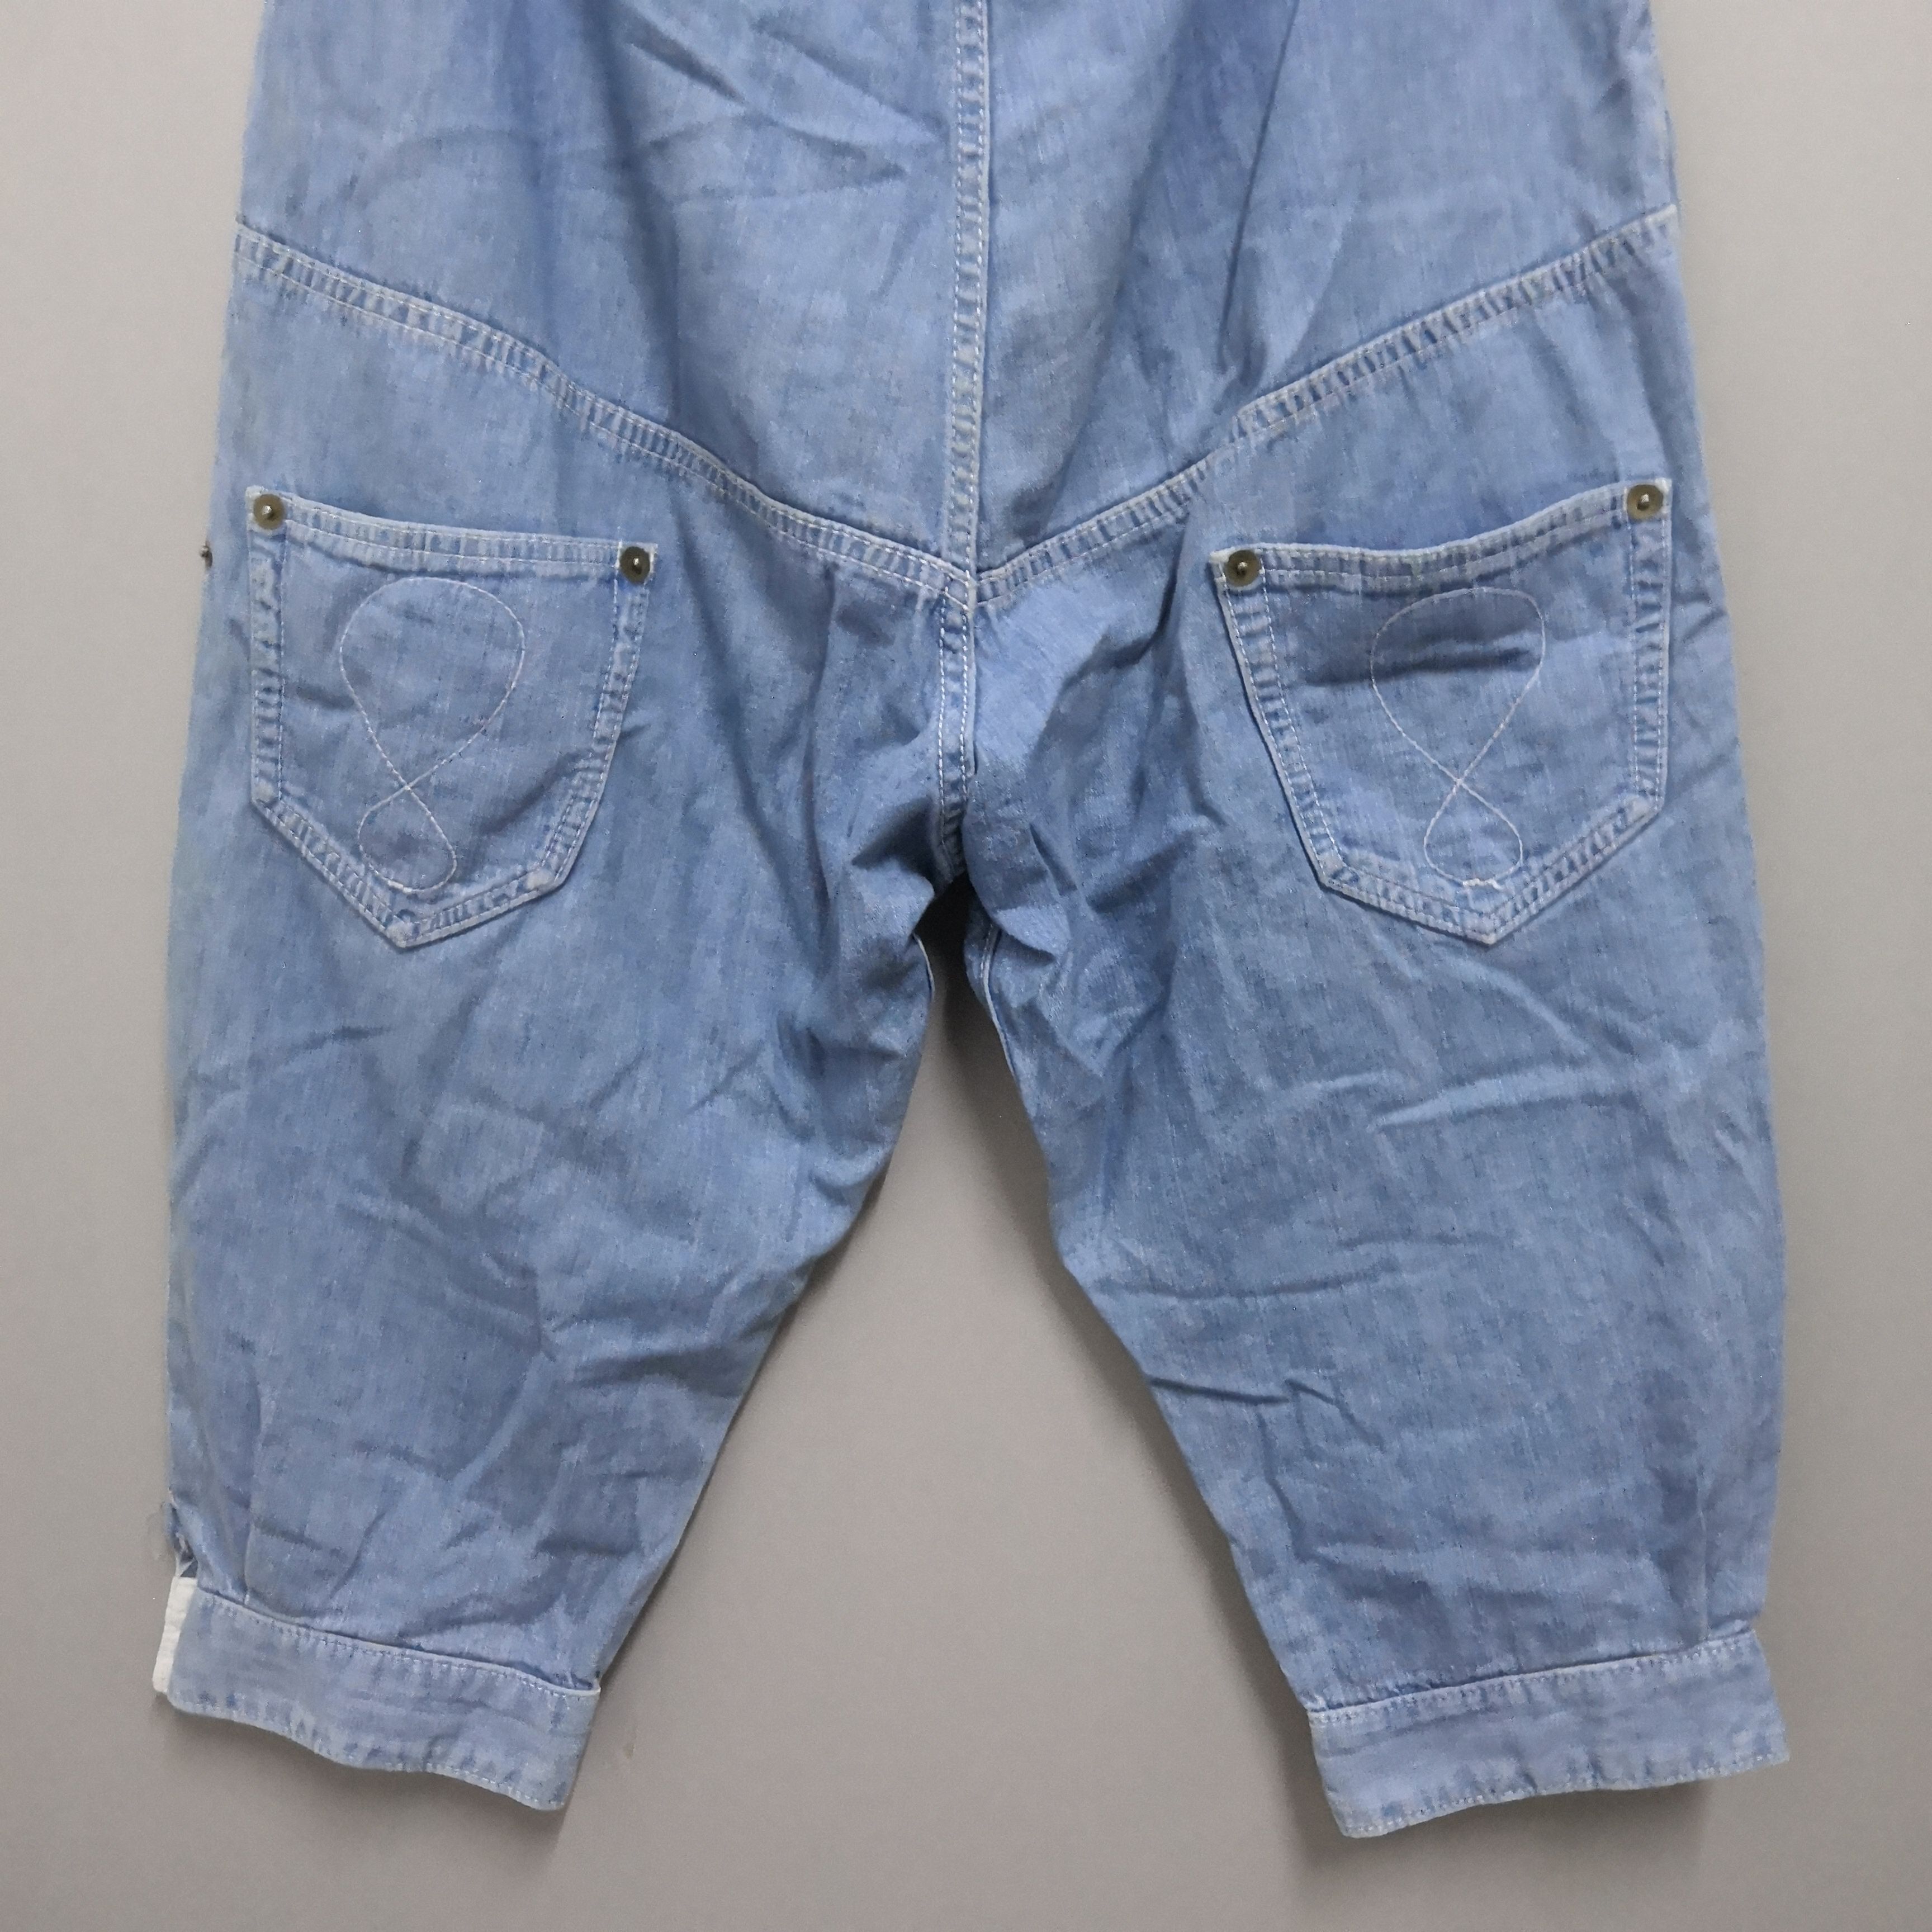 Issey Miyake - Mercibeaucoup Blue Clown Pants Jeans Japan Streetwear - 5